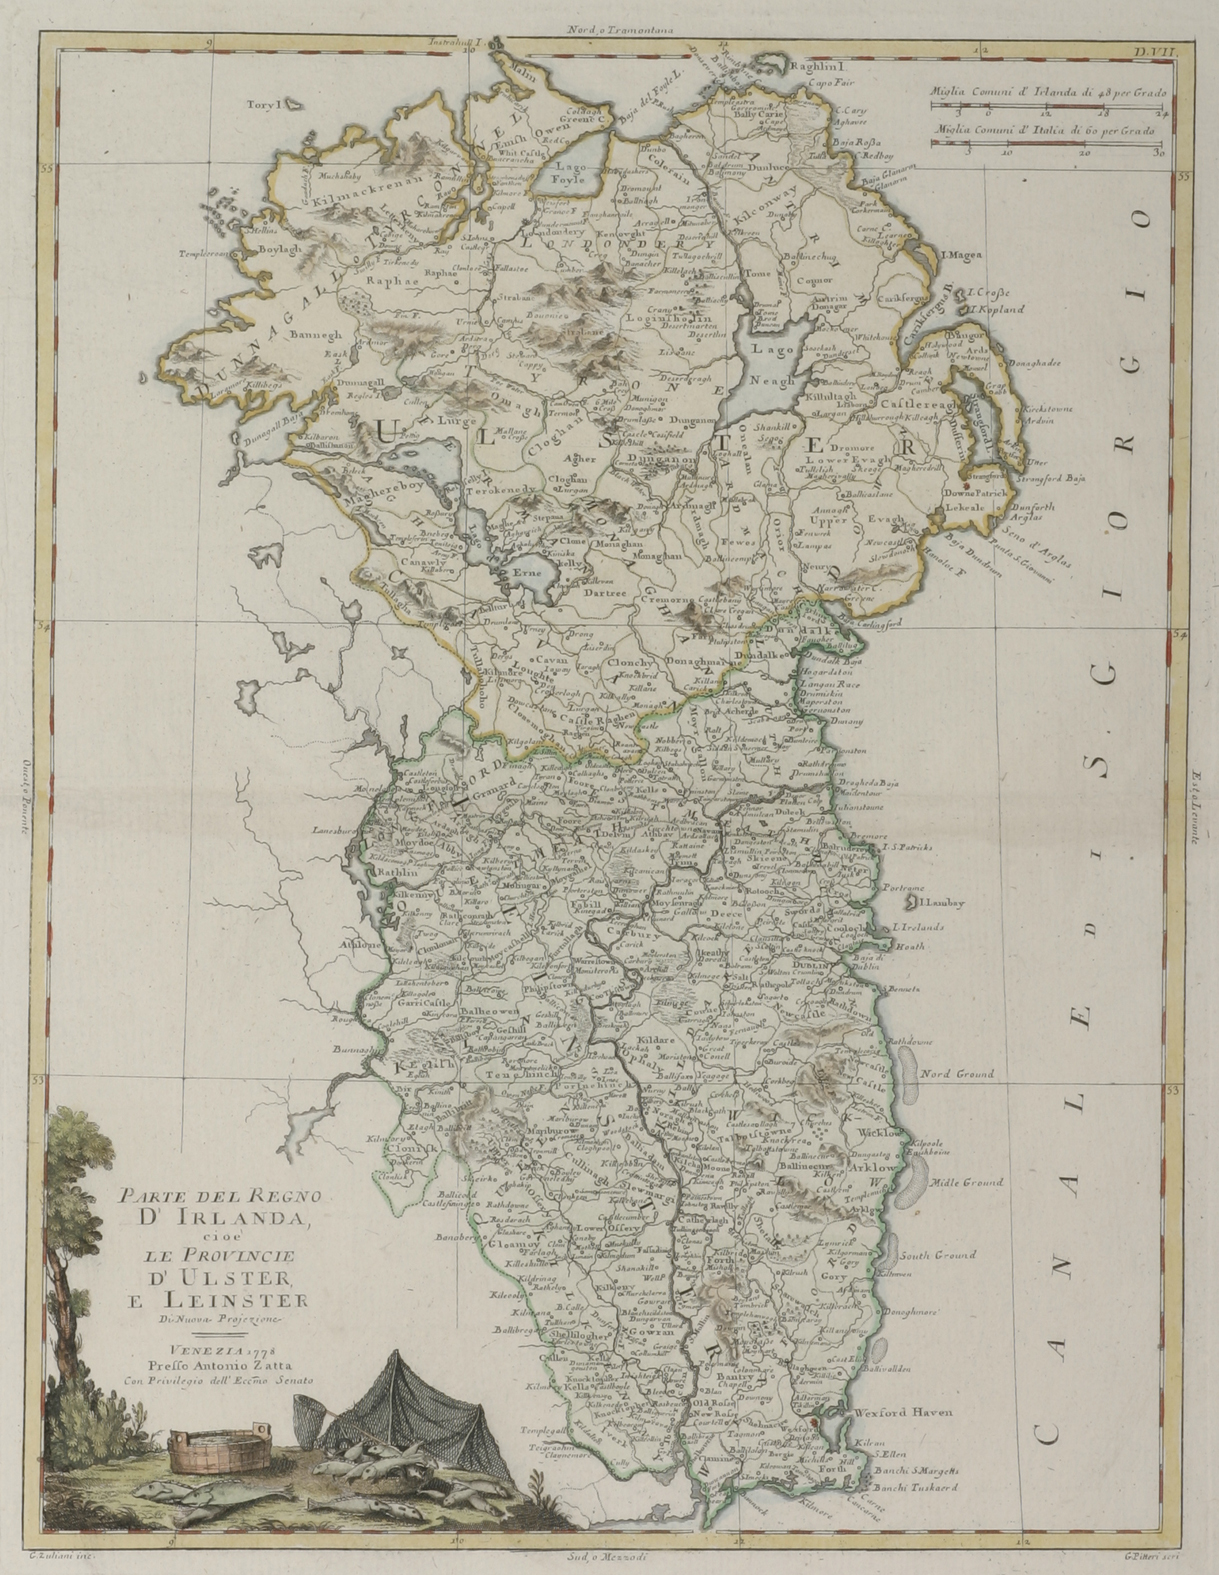 Parte del Regno d Irlanda cioe le Provincie d Ulster, E Leinster. - Antique Print from 1779